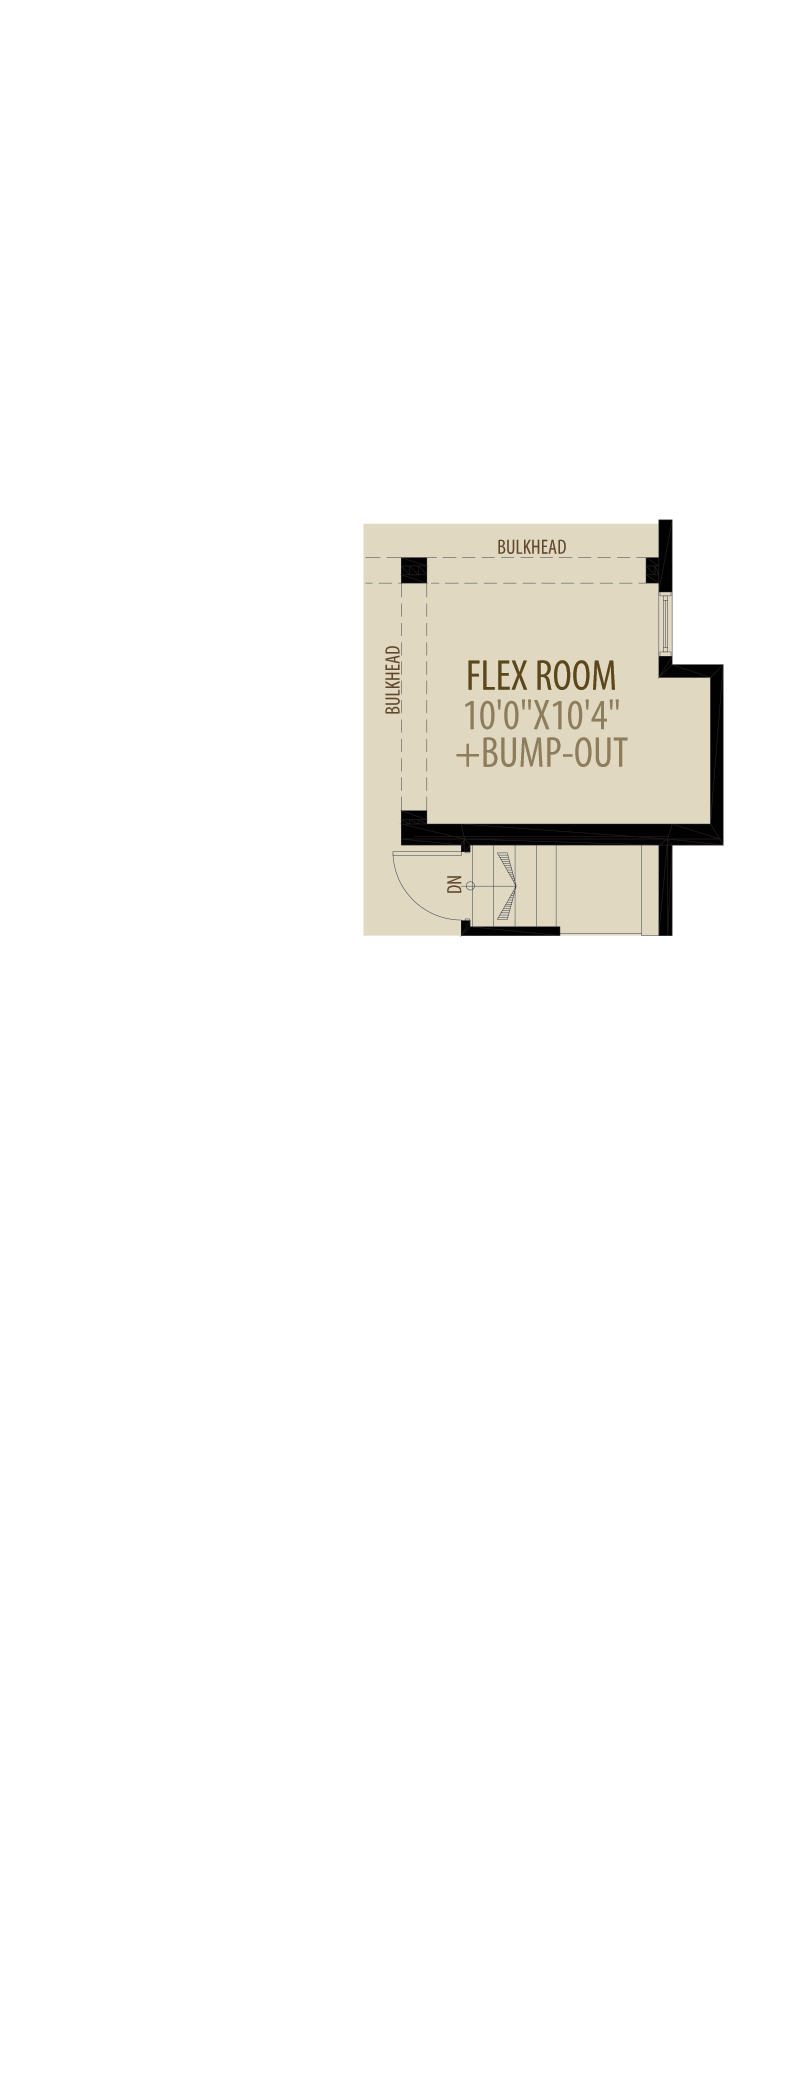 Flex Room Cantilever Adds 14 sq ft